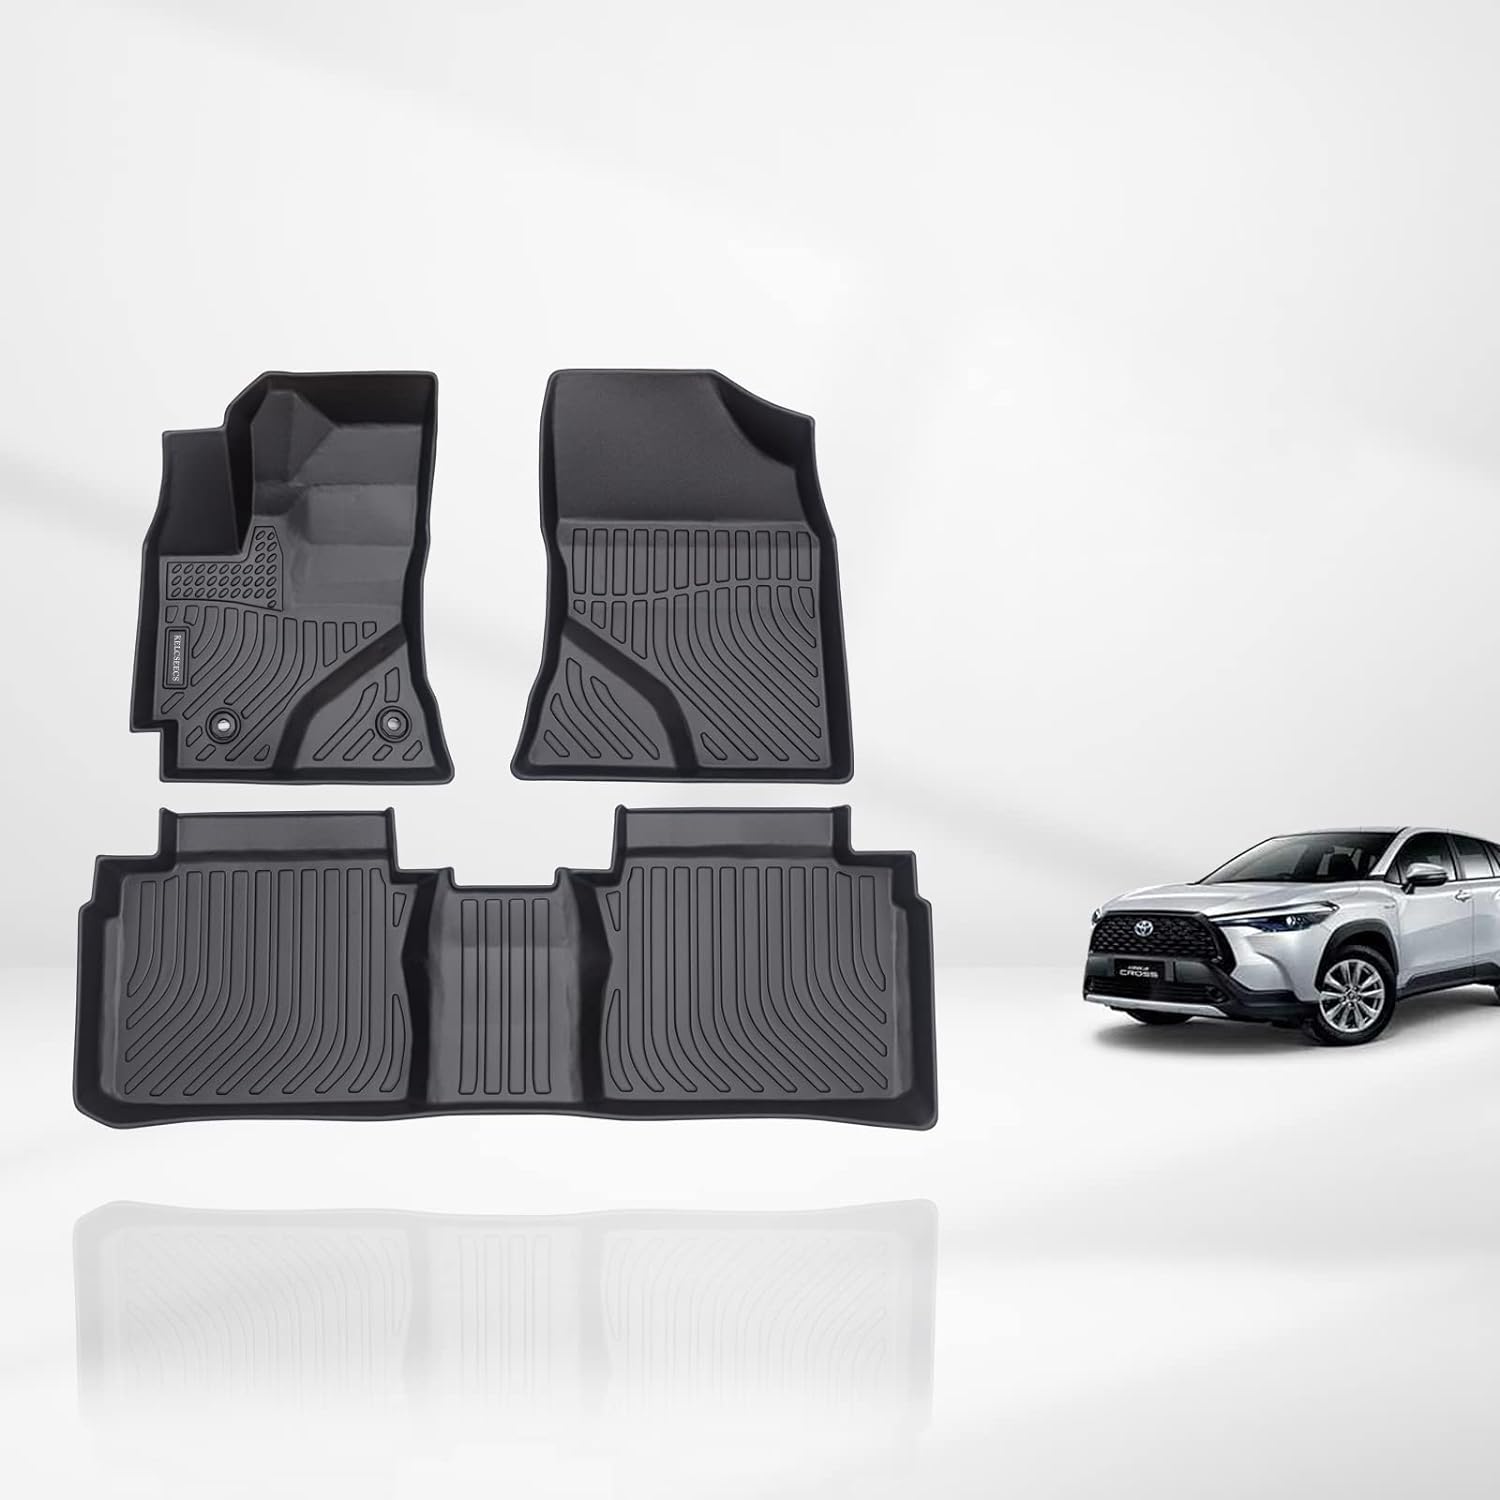 Kelcseecs All Weather 3D Tech Design TPE Car Floor Mats Floor Liners For Toyota Corolla 2014-2019